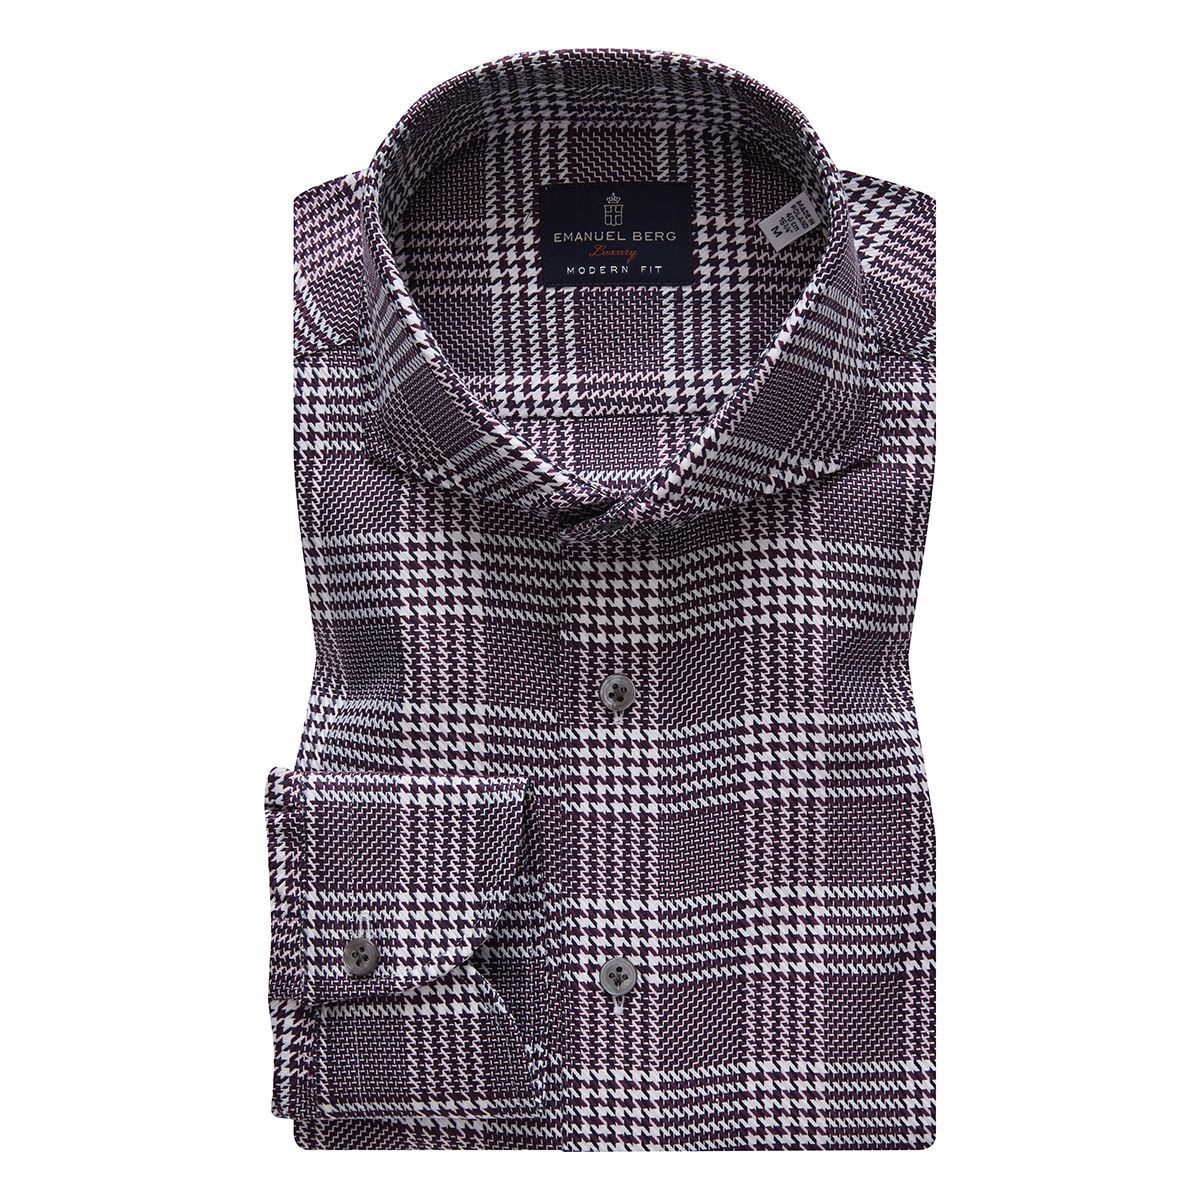 Emanuel Berg patterned collared shirt